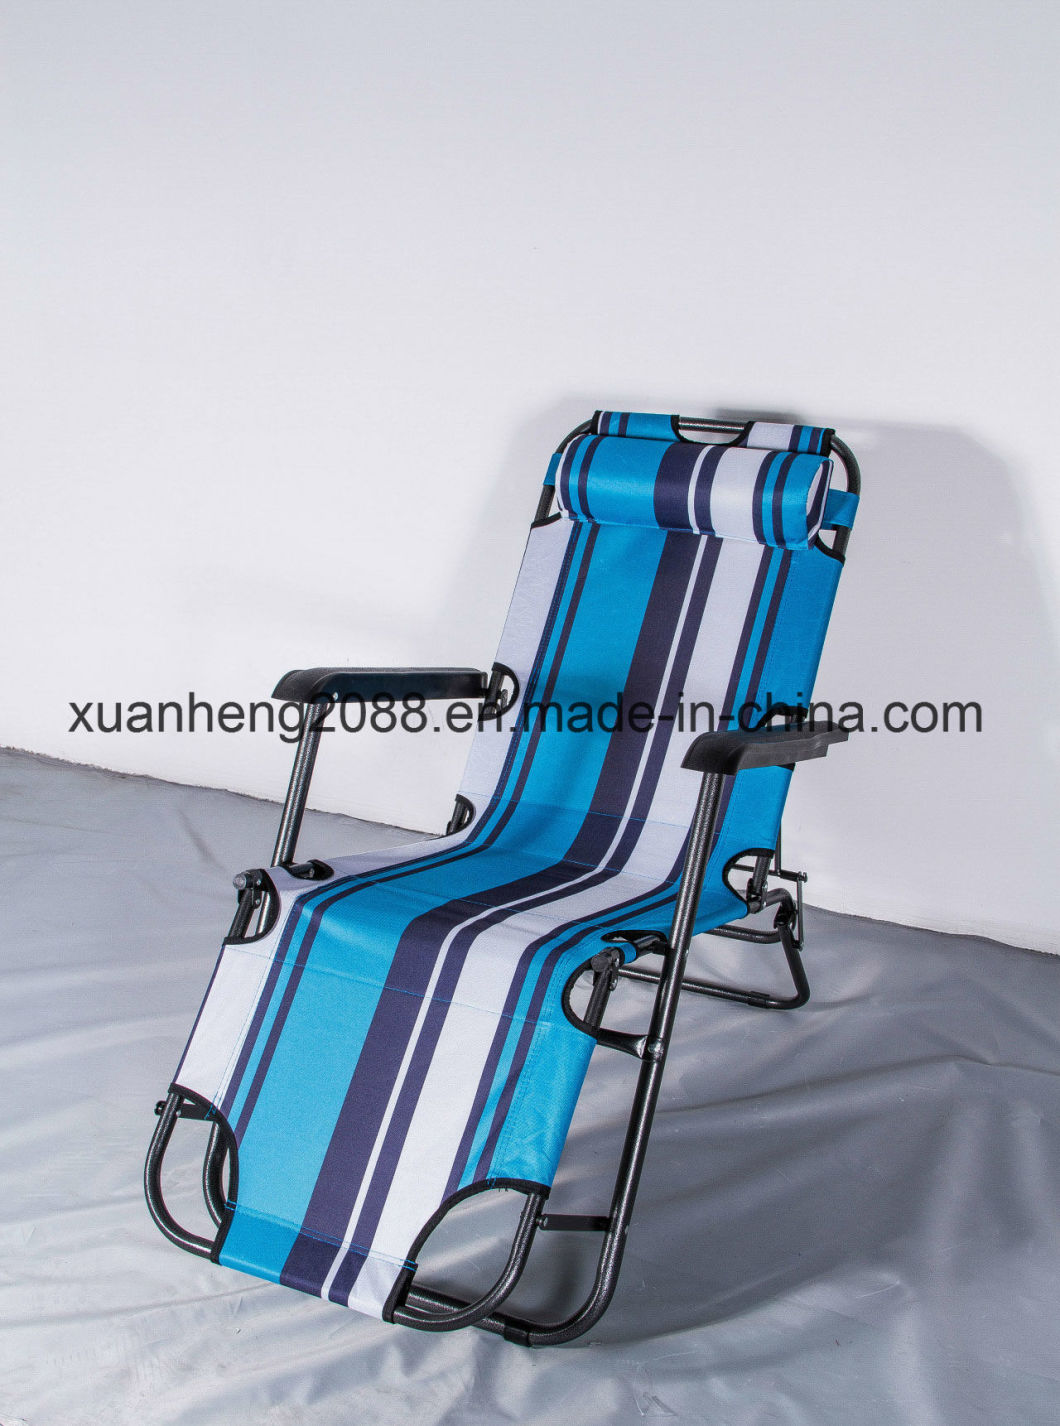 Promotional Top Grade Mini Folding Beach Chair